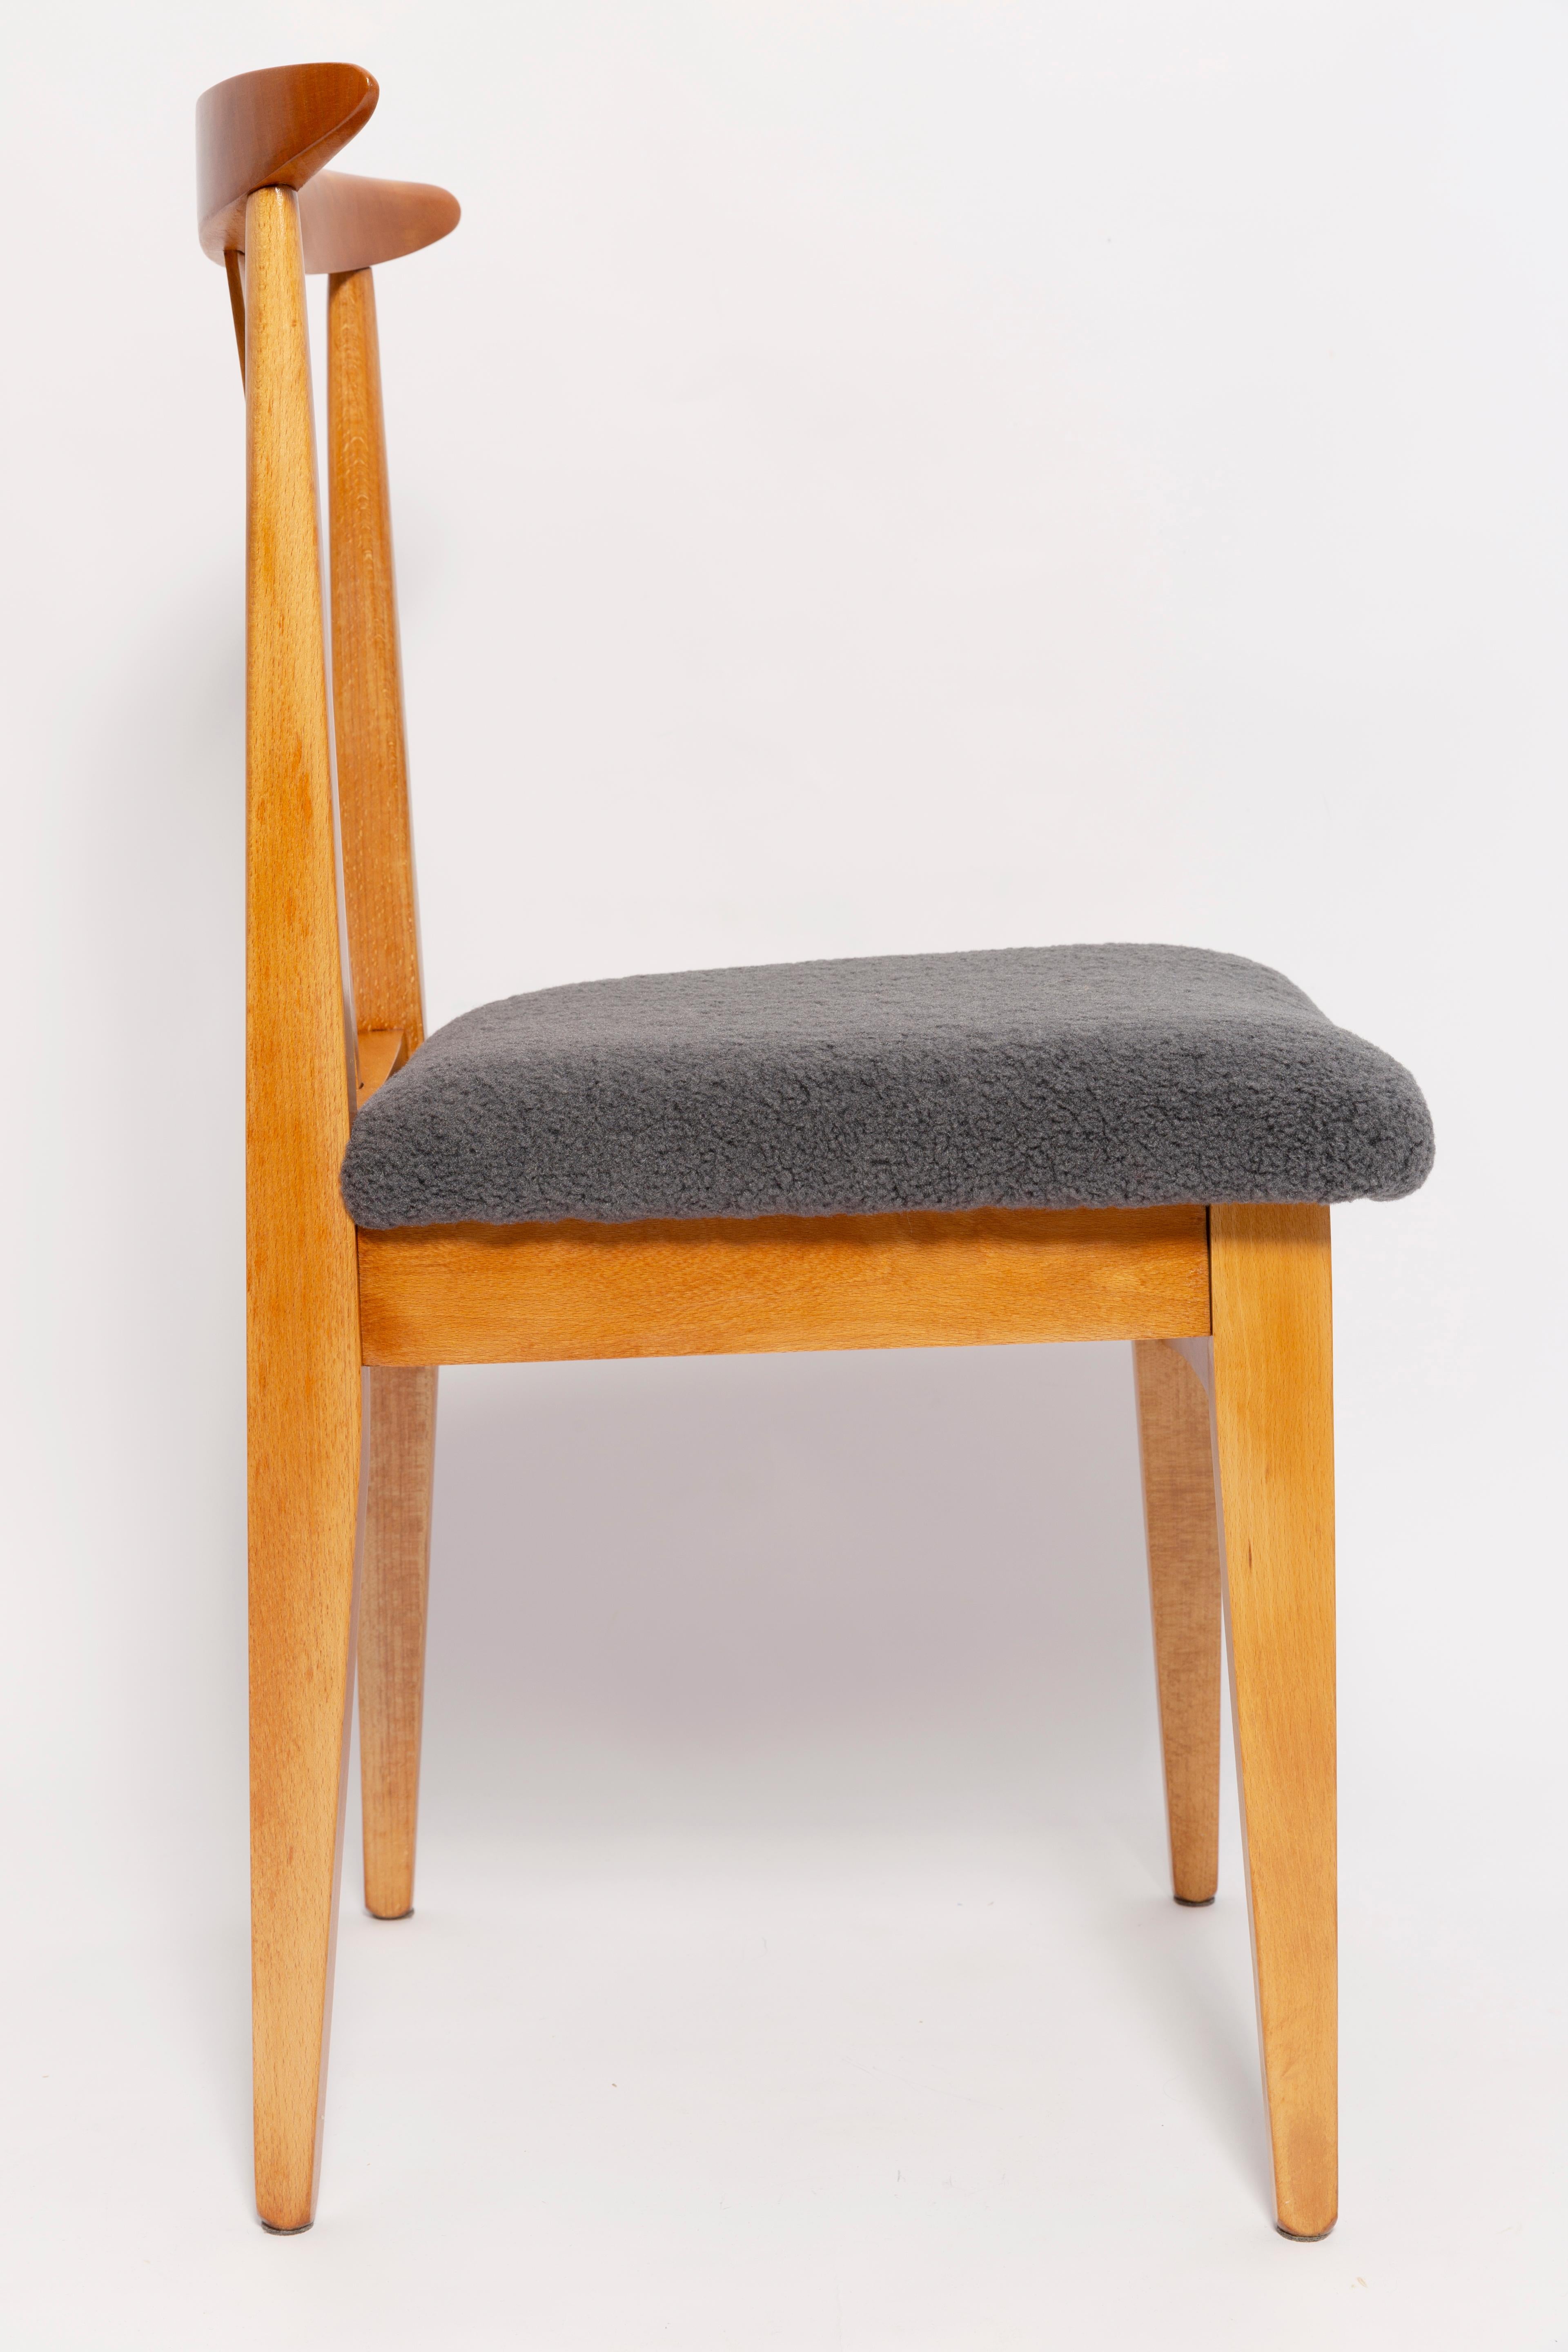 20th Century Mid-Century Graphite Gray Boucle Chair, Light Wood, M. Zielinski, Europe, 1960 For Sale